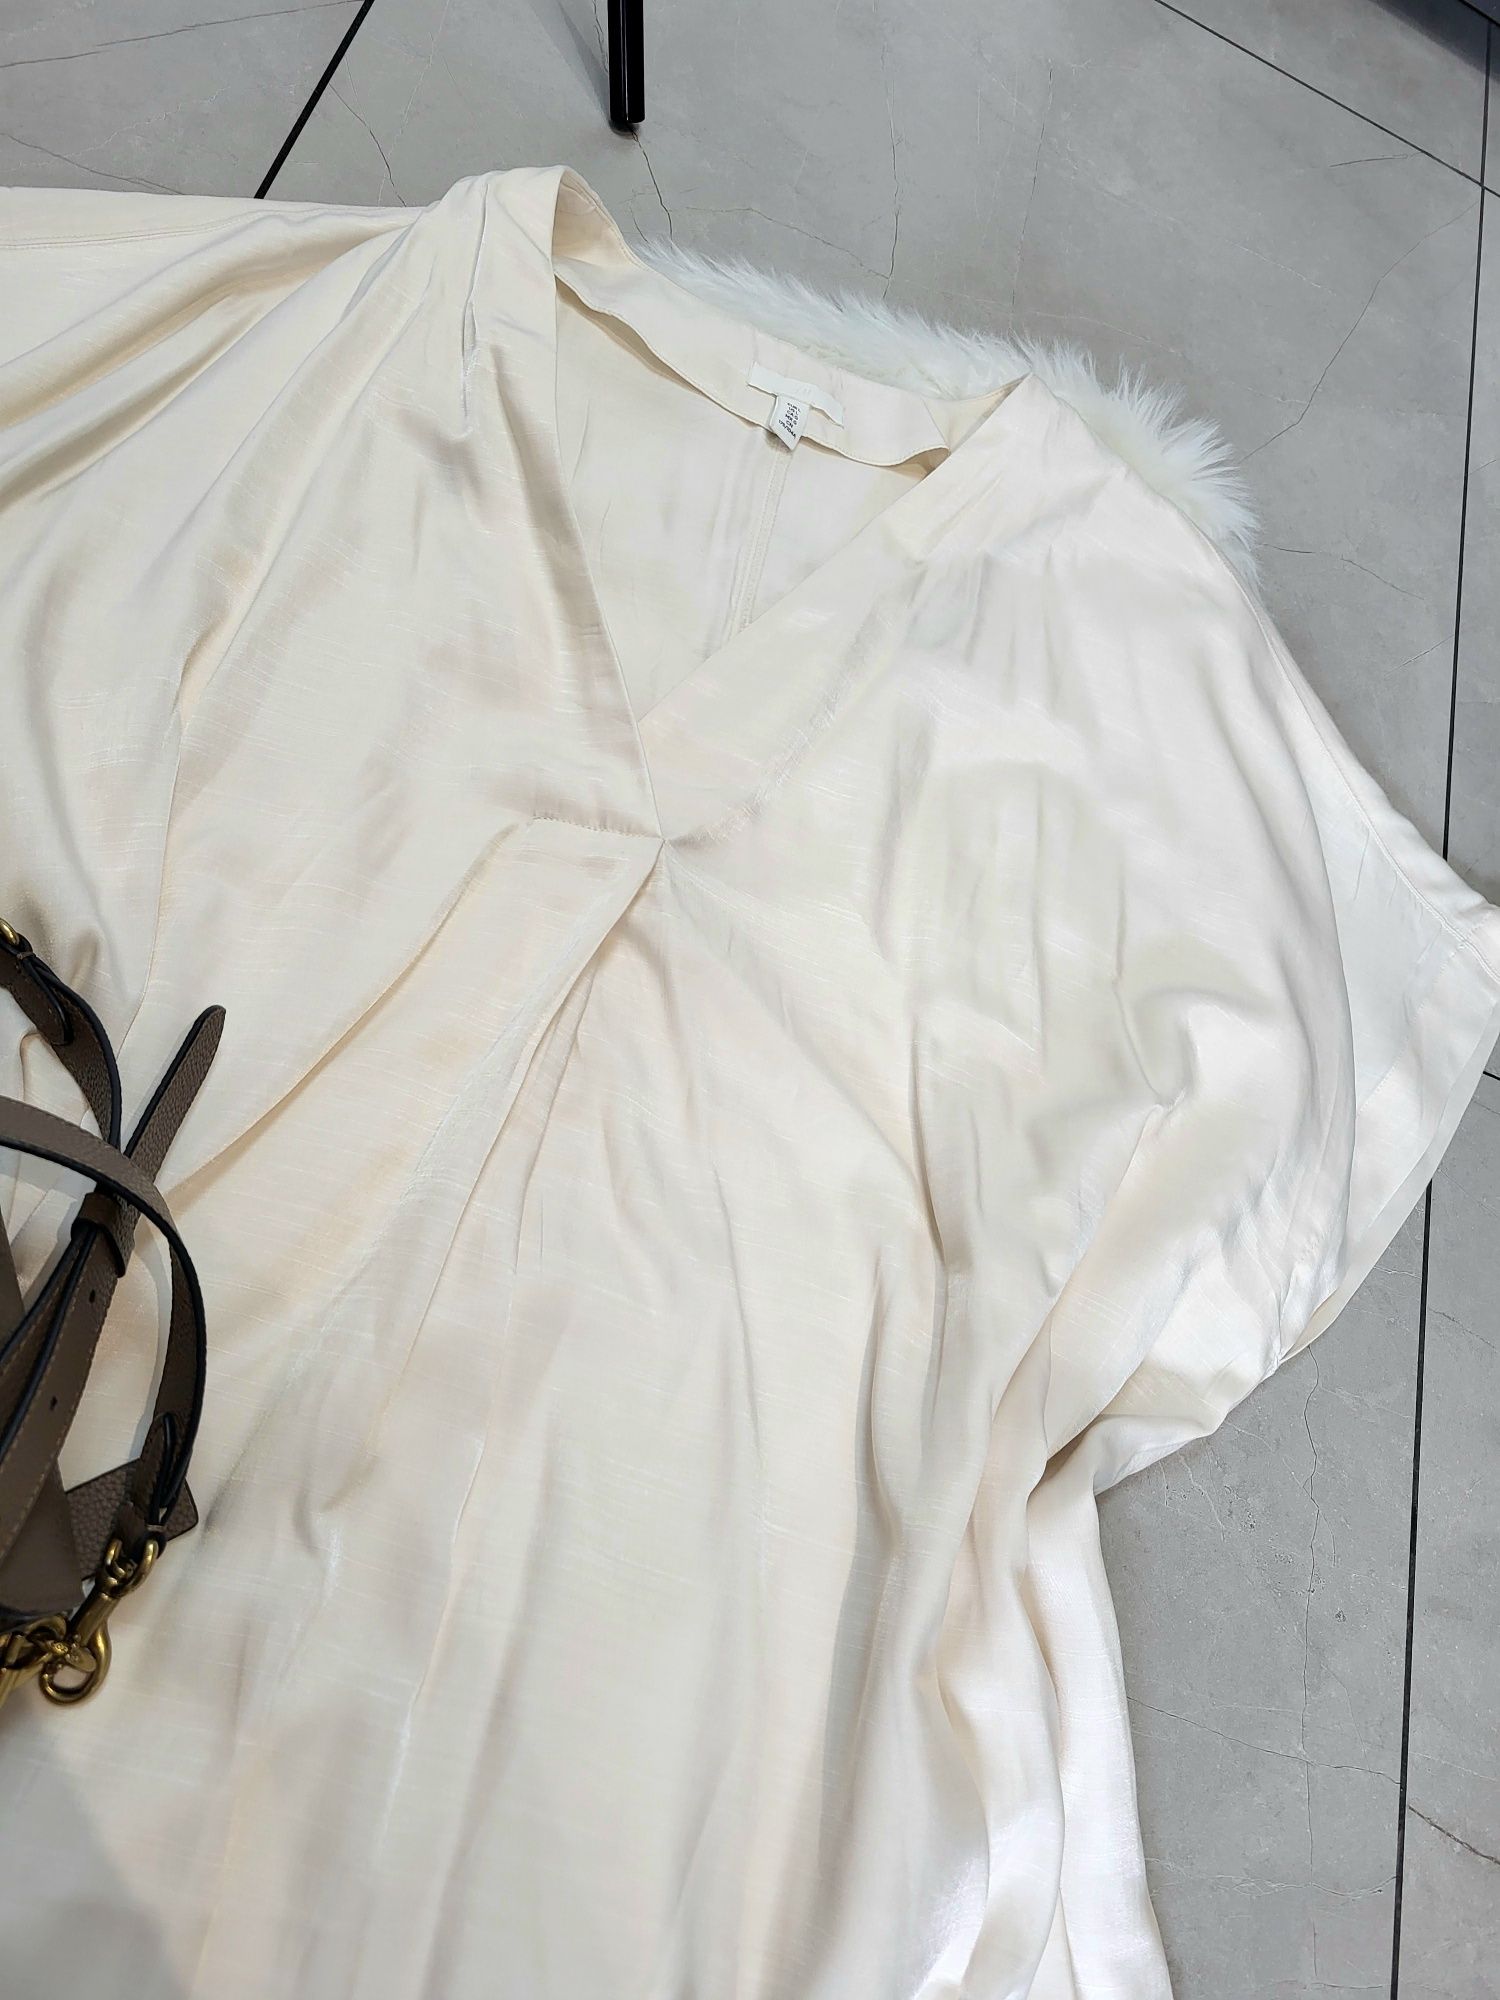 Kremowa elegancka koszulo-bluzka H&M rozmiar 3XL